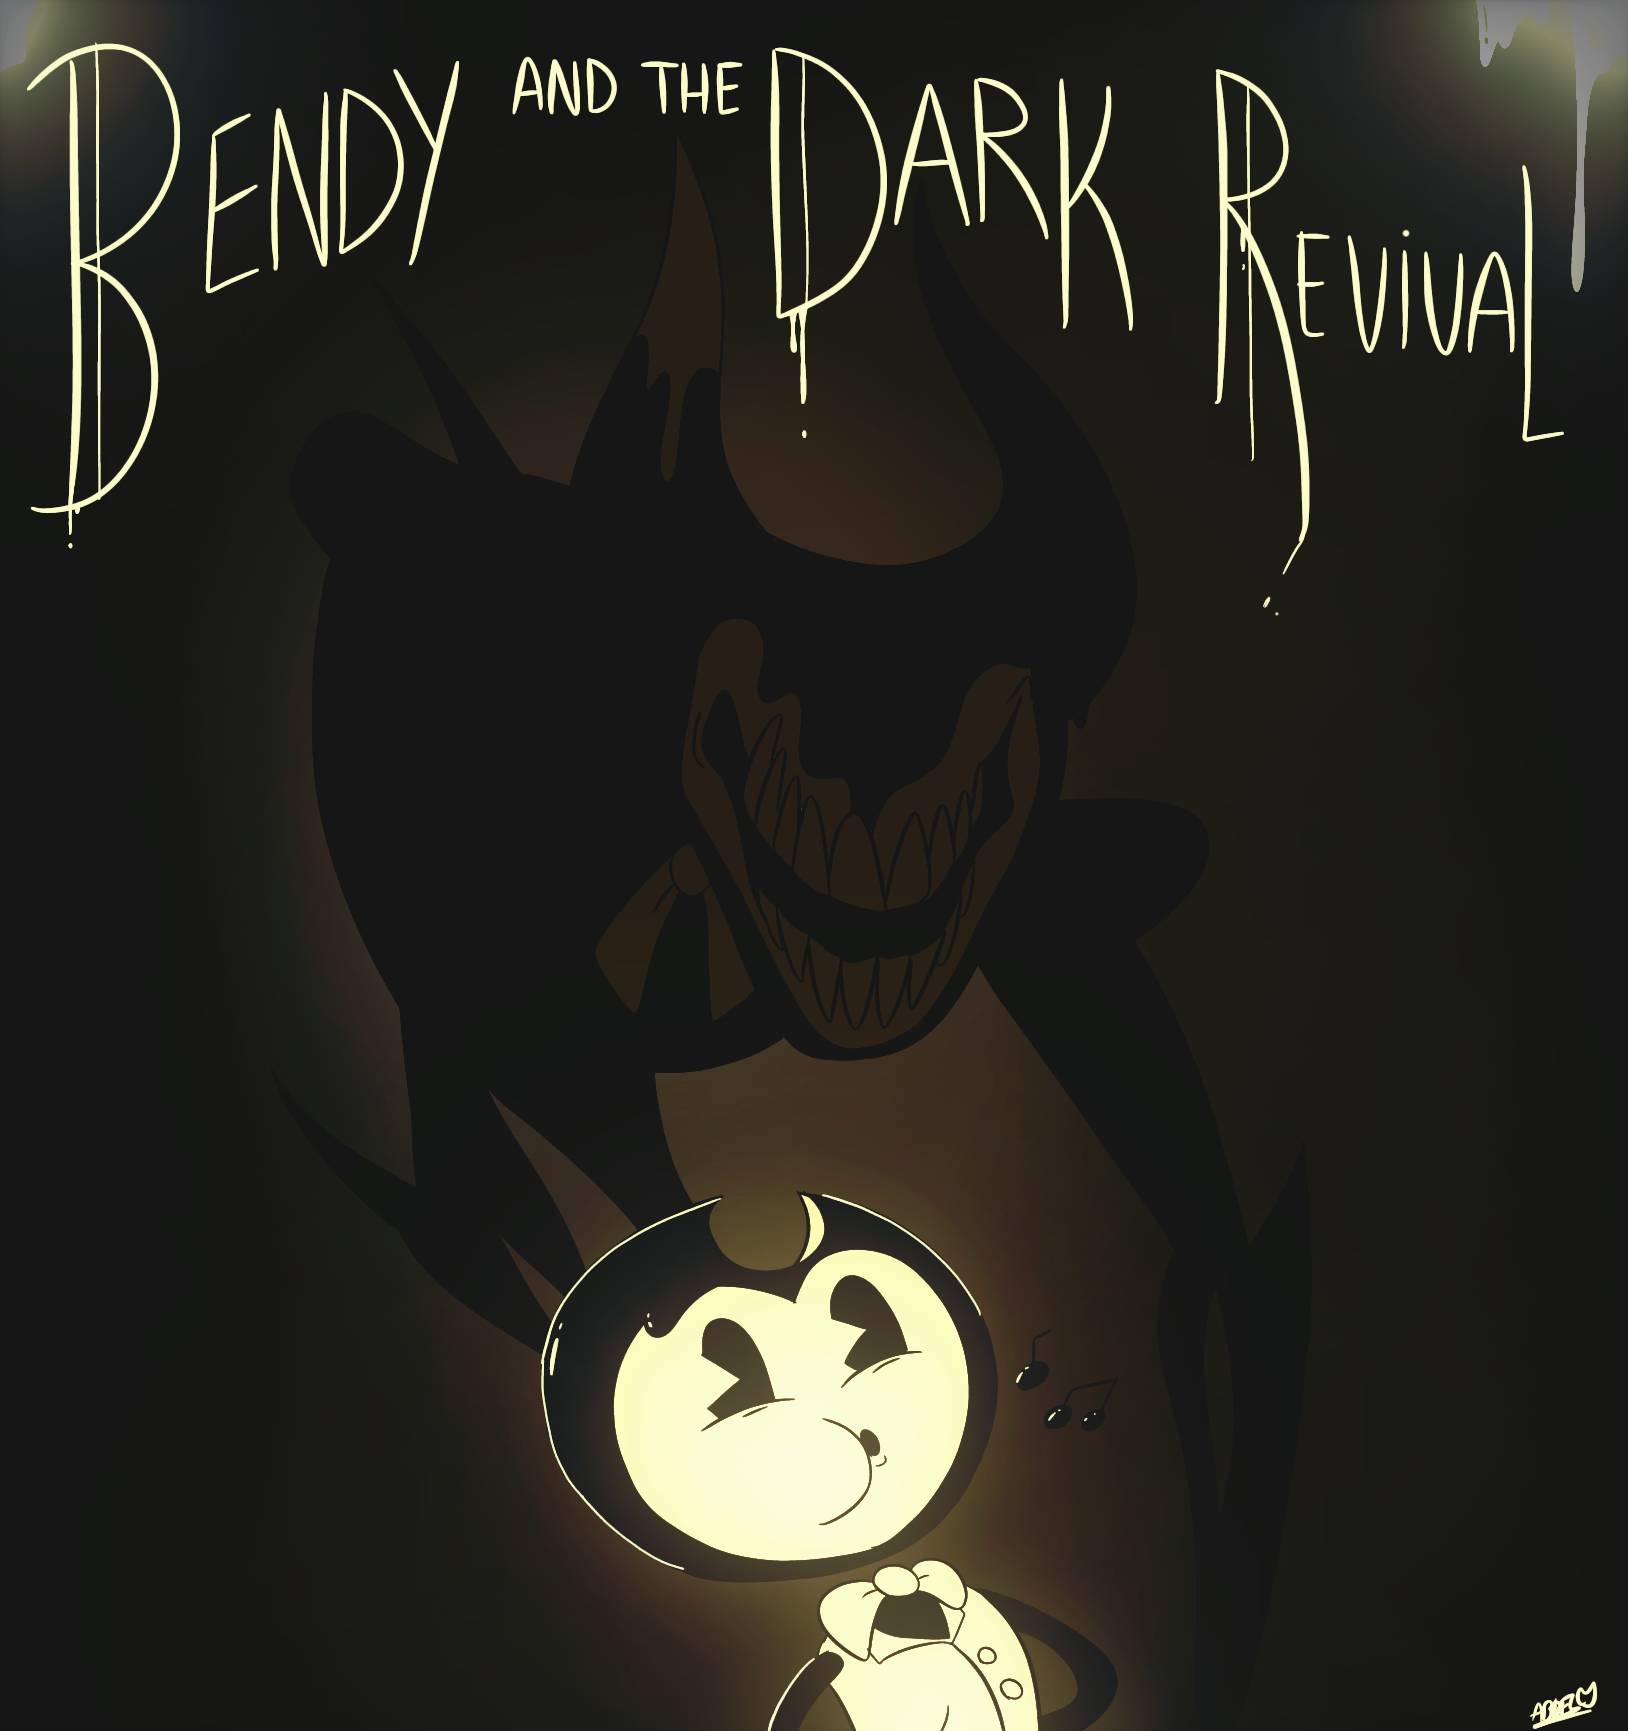 Bendy and the dark revival Art by AkageIMP on DeviantArt